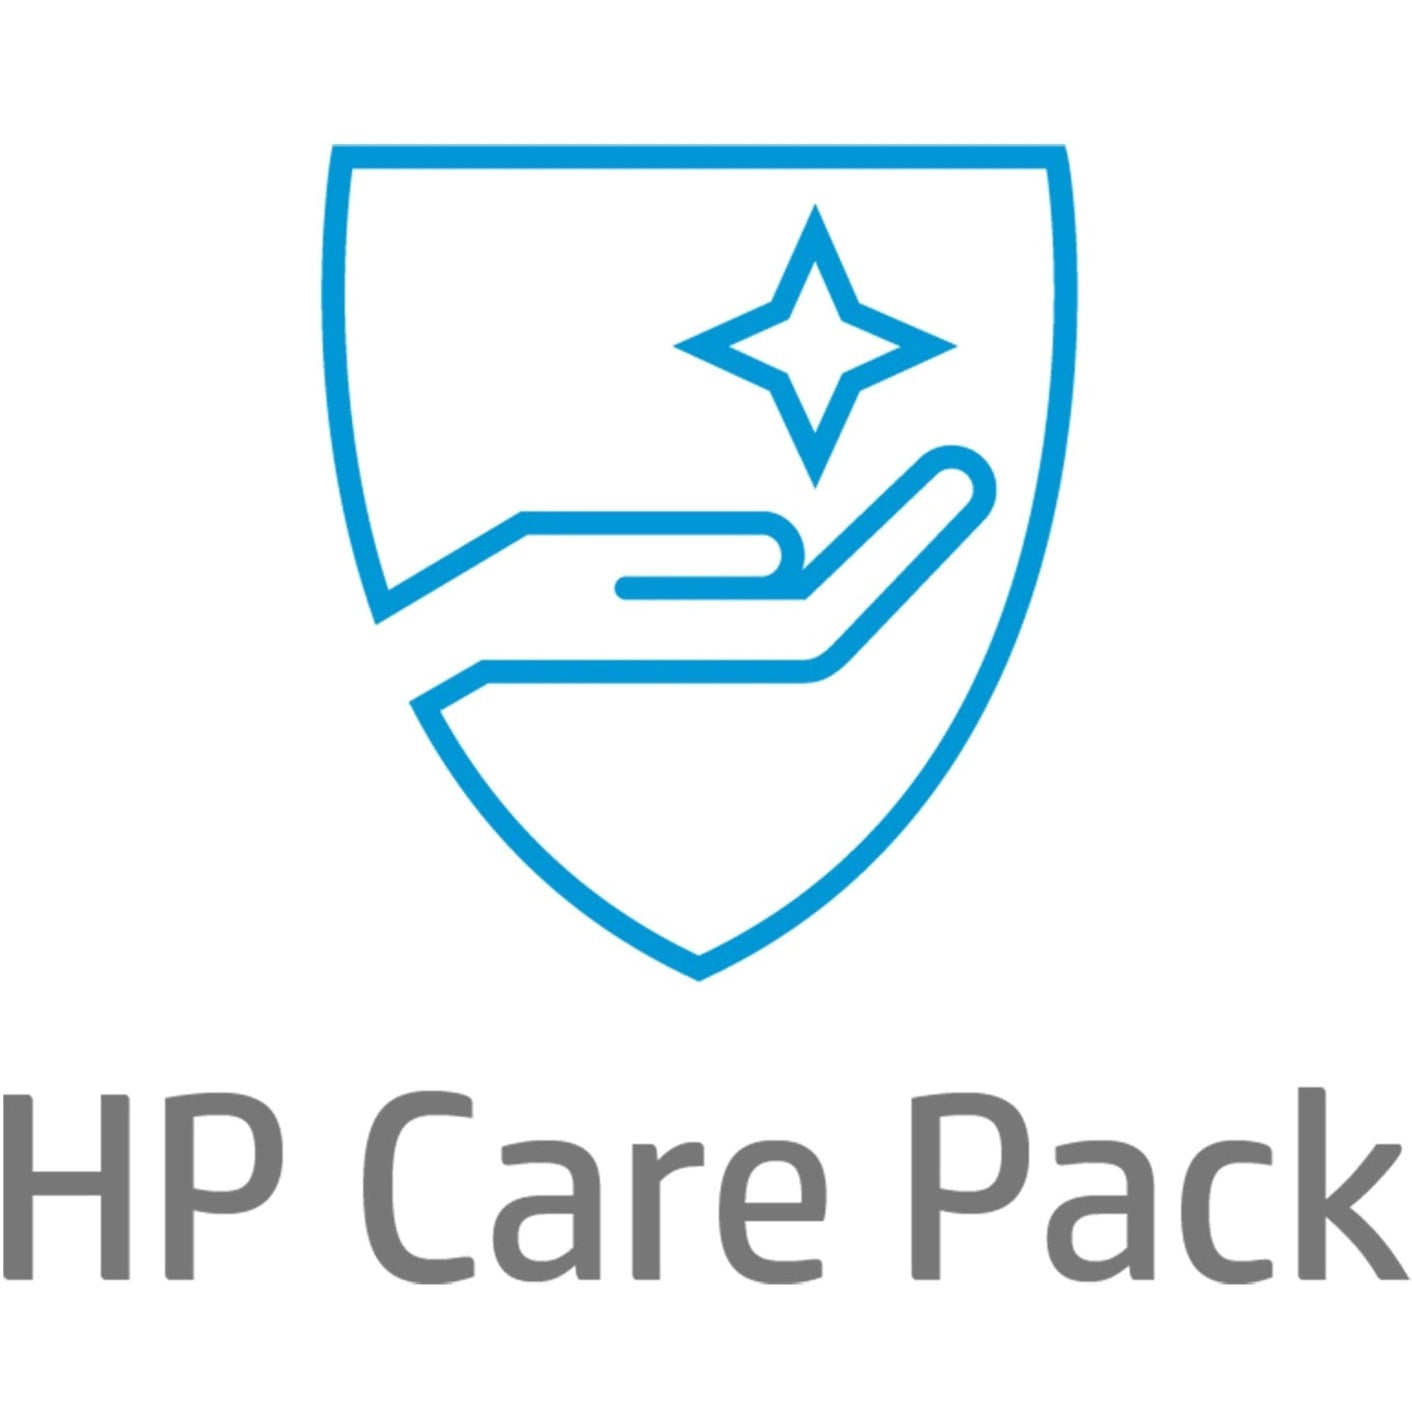 HP Care Pack - 2 Year - Warranty (U9DN4E)